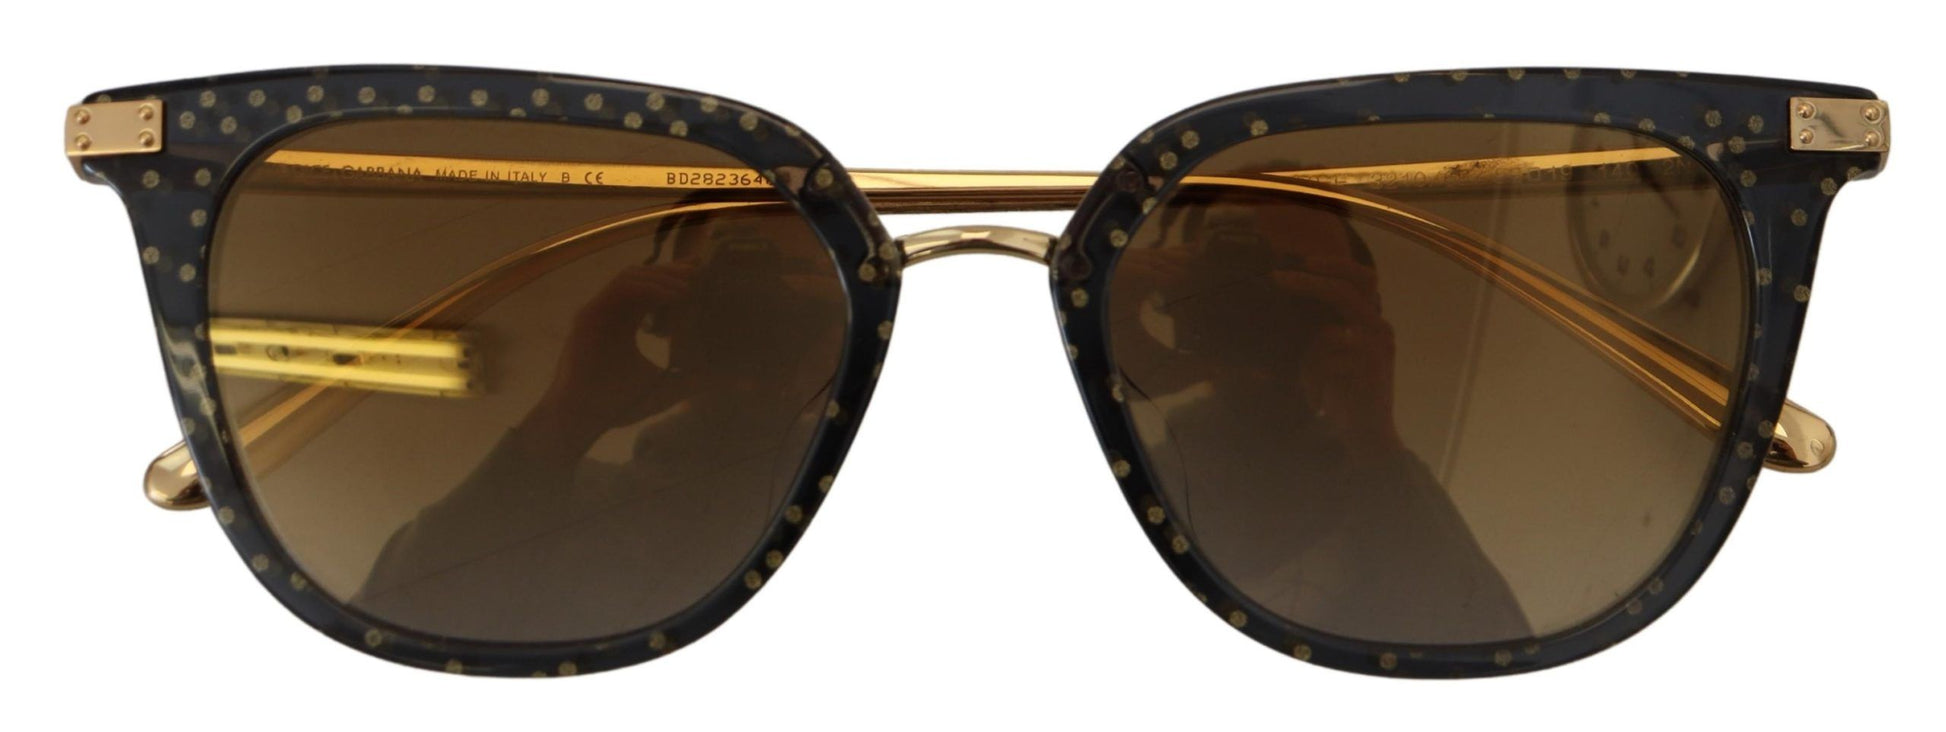 Chic Irregular-Shaped Designer Sunglasses